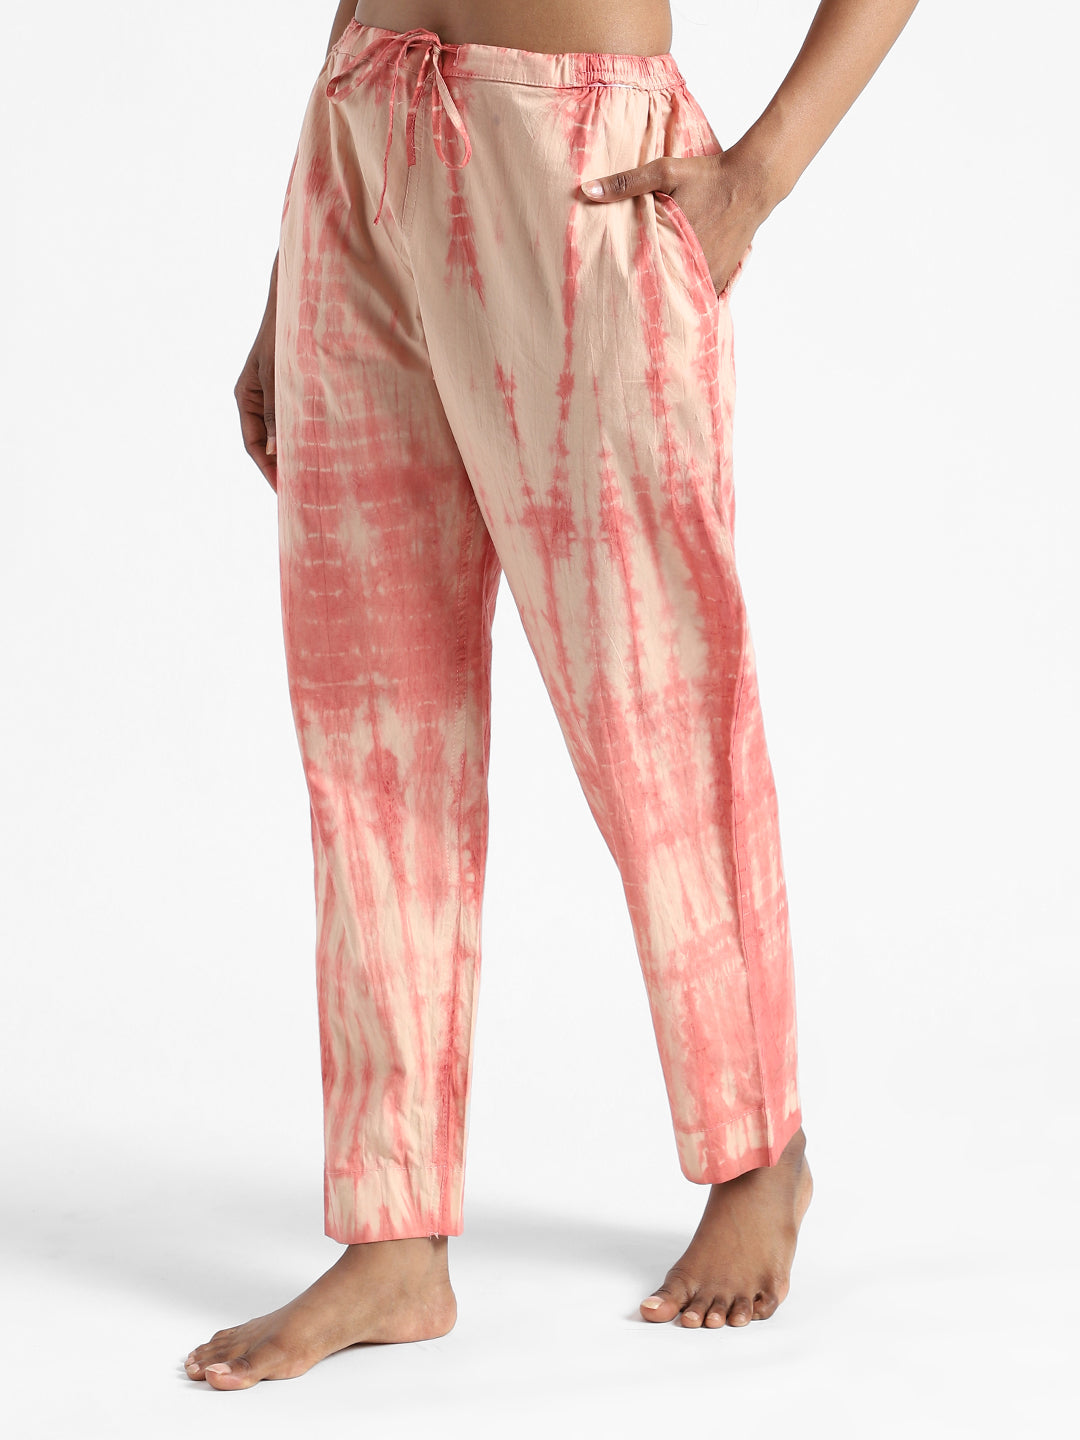 Sun Orange Women's Organic Cotton & Natural Dyed Slim Fit Tie & Dye Pants